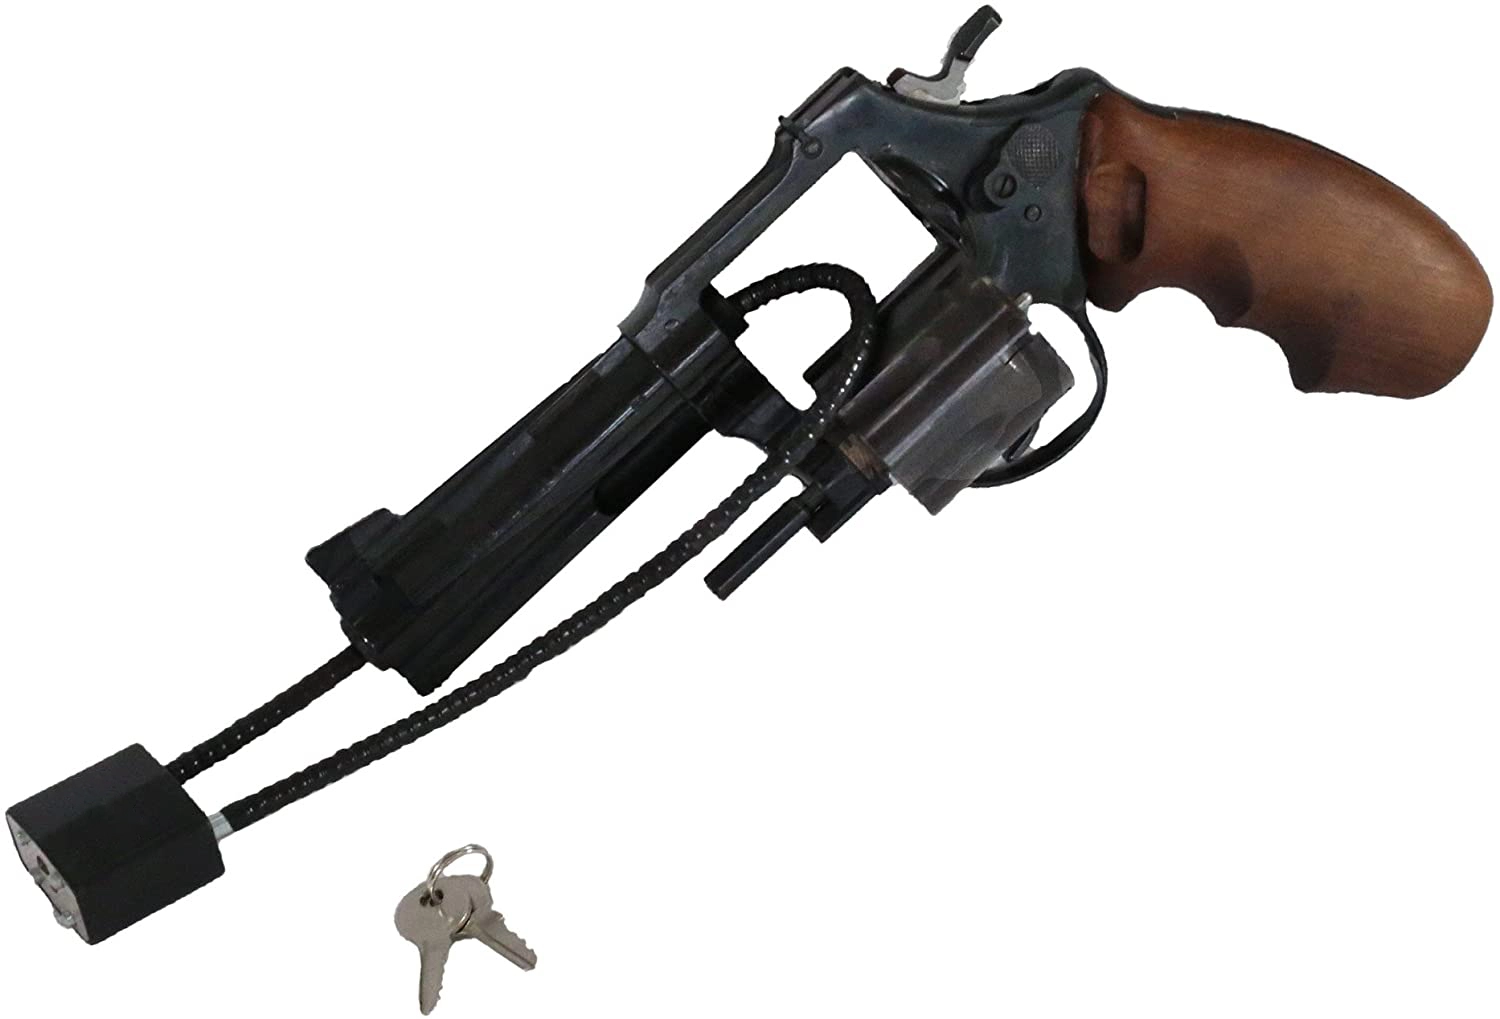 Trigger Lock 15'' Cable Gun Lock With Key Lock Fits Pistols Hand Shotgun Rifles